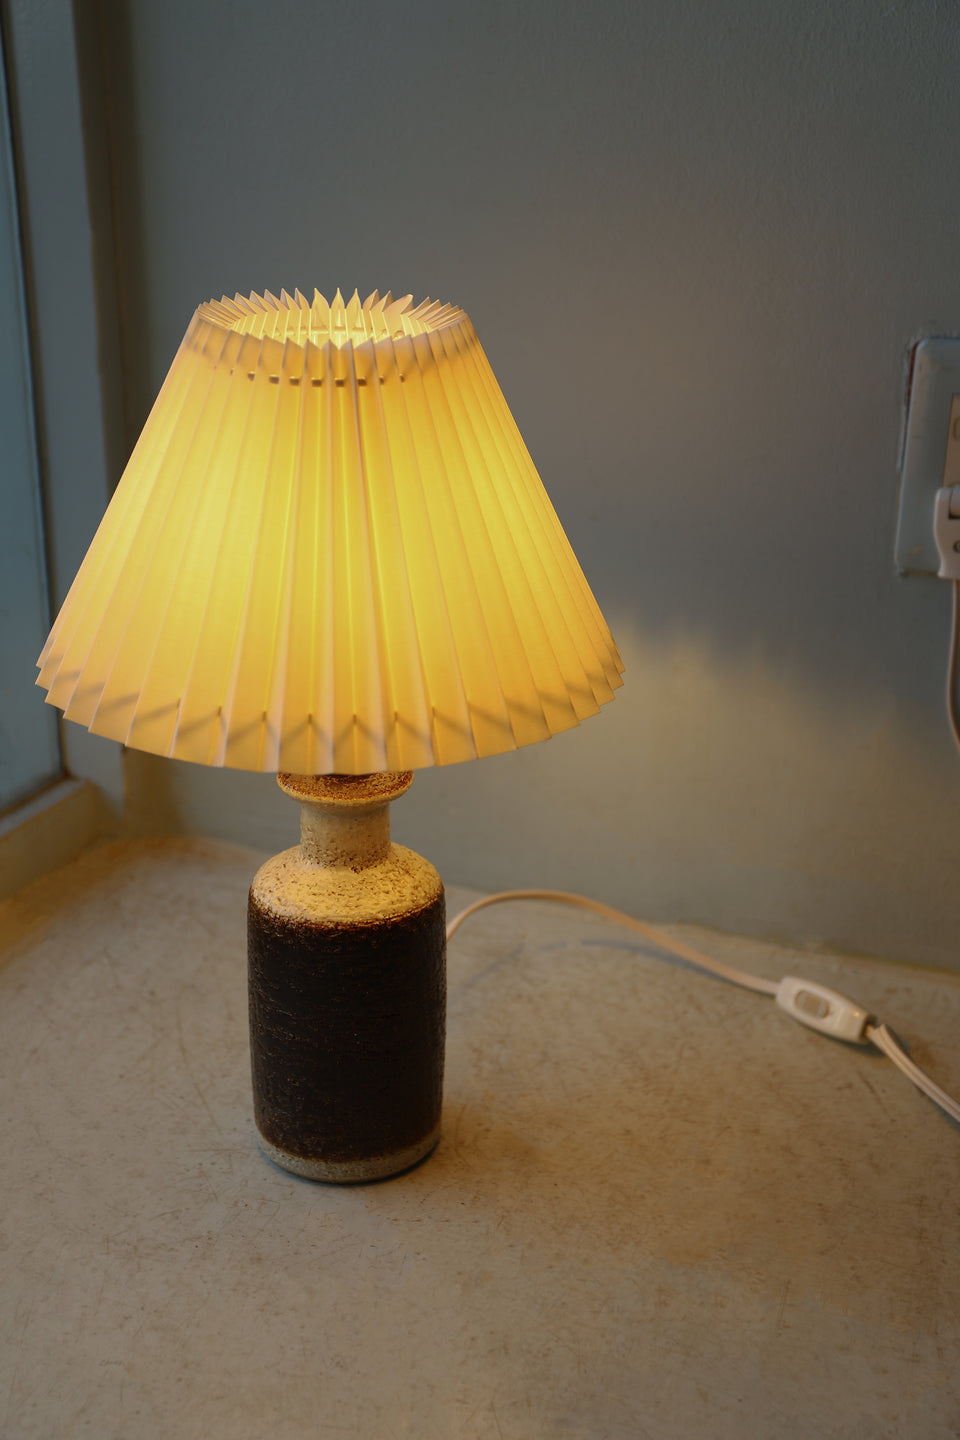 Søholm Table Lamp “Brunette” Svend Aage Jensen Danish Vintage/デンマークヴィンテージ スーホルム テーブルランプ スヴェン・オーゲ・イェンセン 北欧インテリア